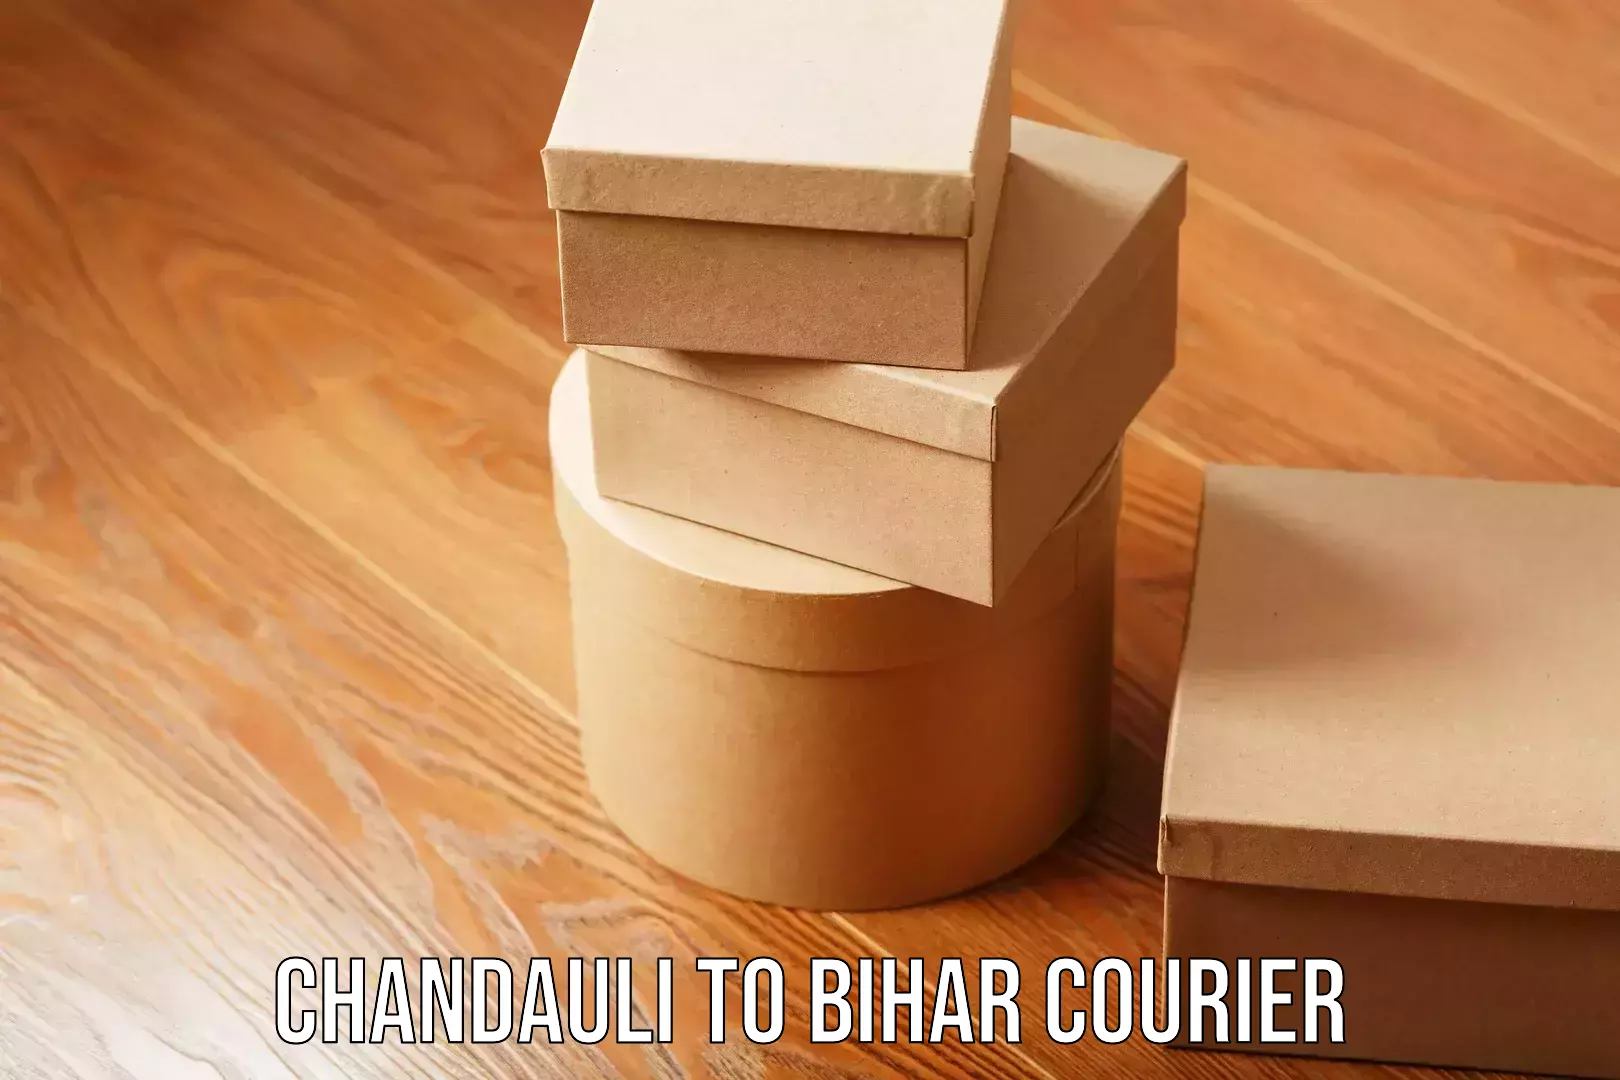 Cost-effective courier options Chandauli to Bihar